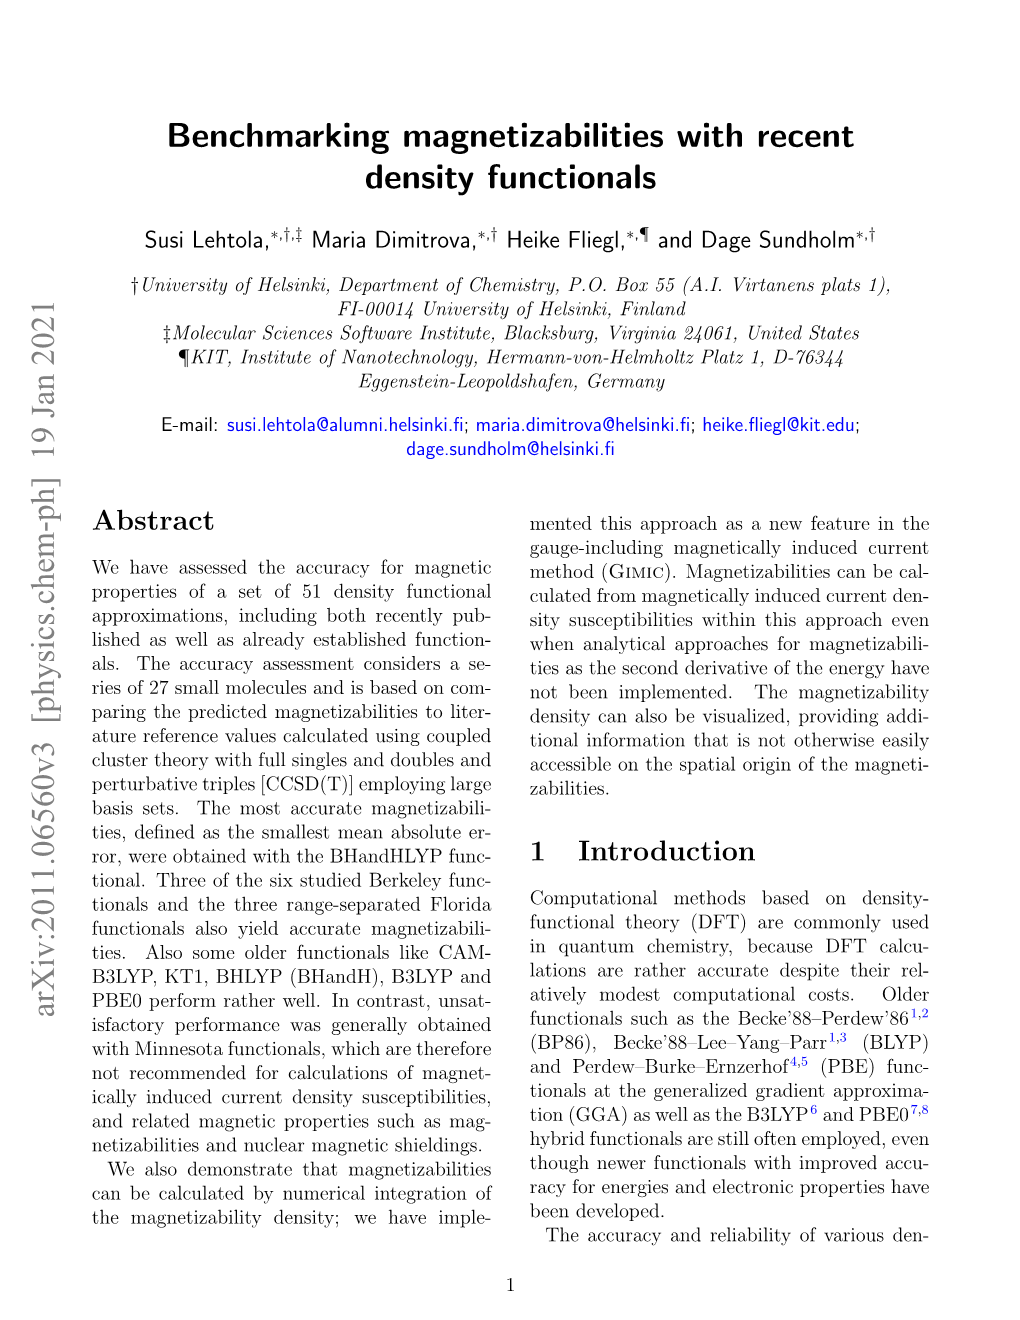 Benchmarking Magnetizabilities with Recent Density Functionals Arxiv